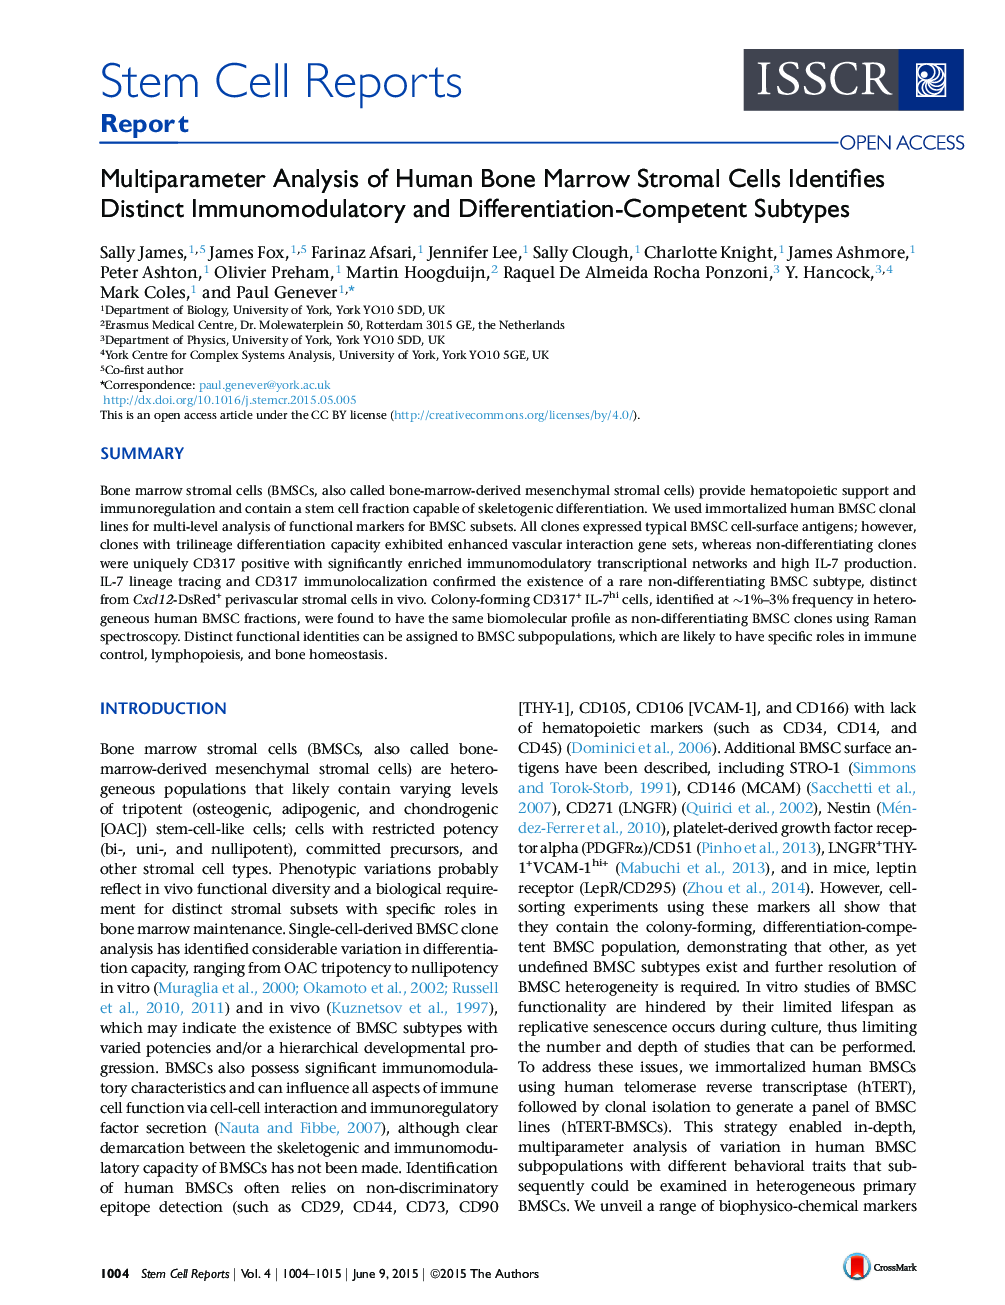 Multiparameter Analysis of Human Bone Marrow Stromal Cells Identifies Distinct Immunomodulatory and Differentiation-Competent Subtypes 